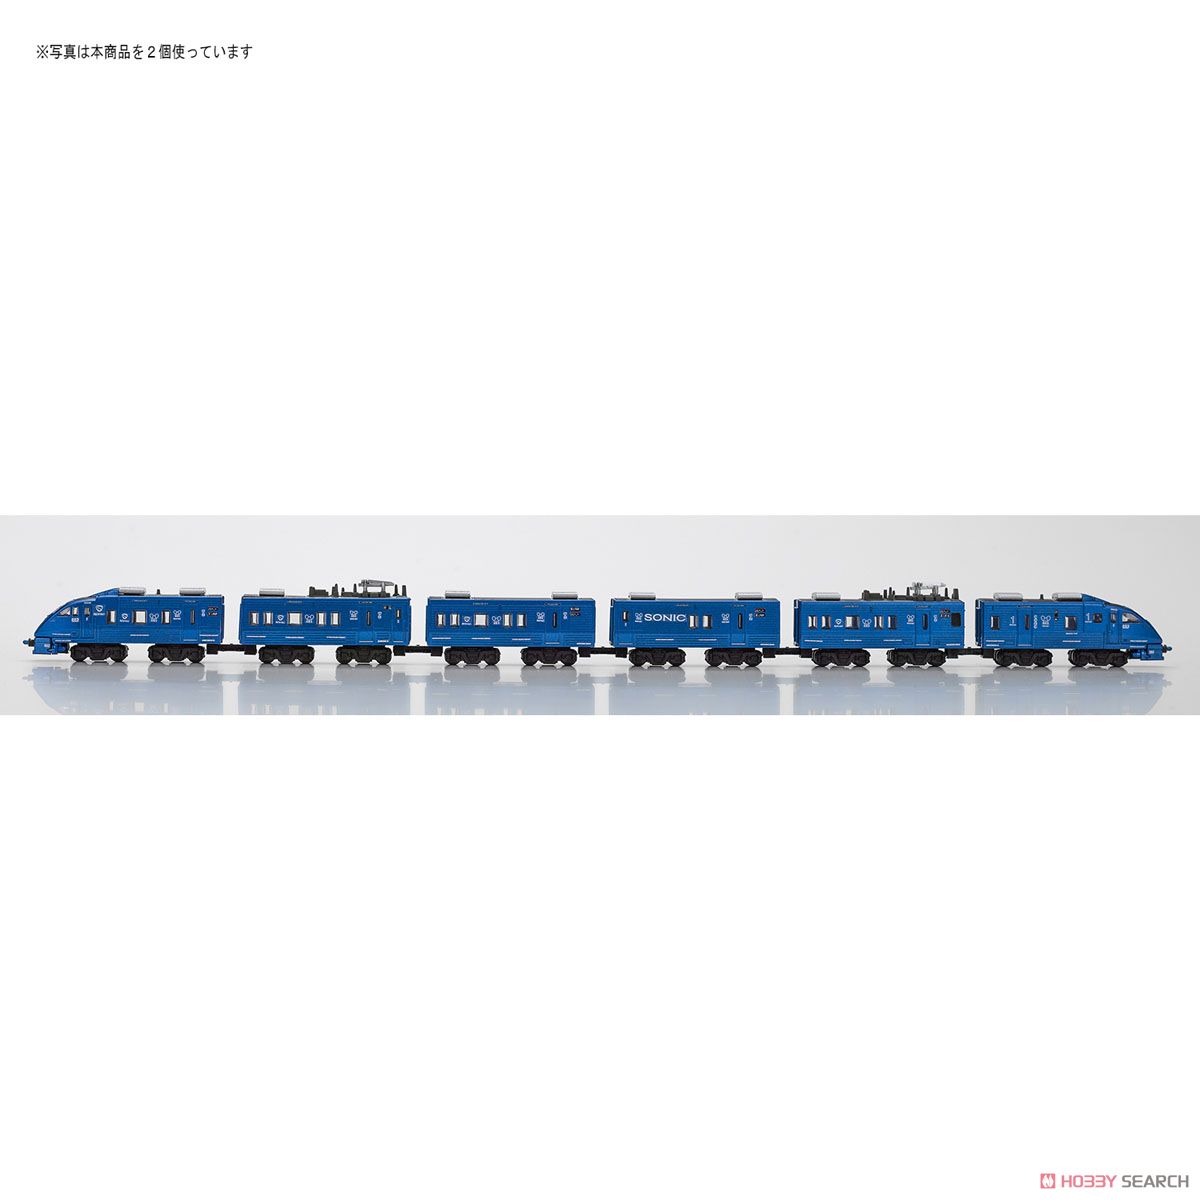 Bトレインショーティー 883系 「ソニック」 SONIC EXPRESS (4両セット) (水戸岡鋭治コレクションシリーズ) (鉄道模型) その他の画像2